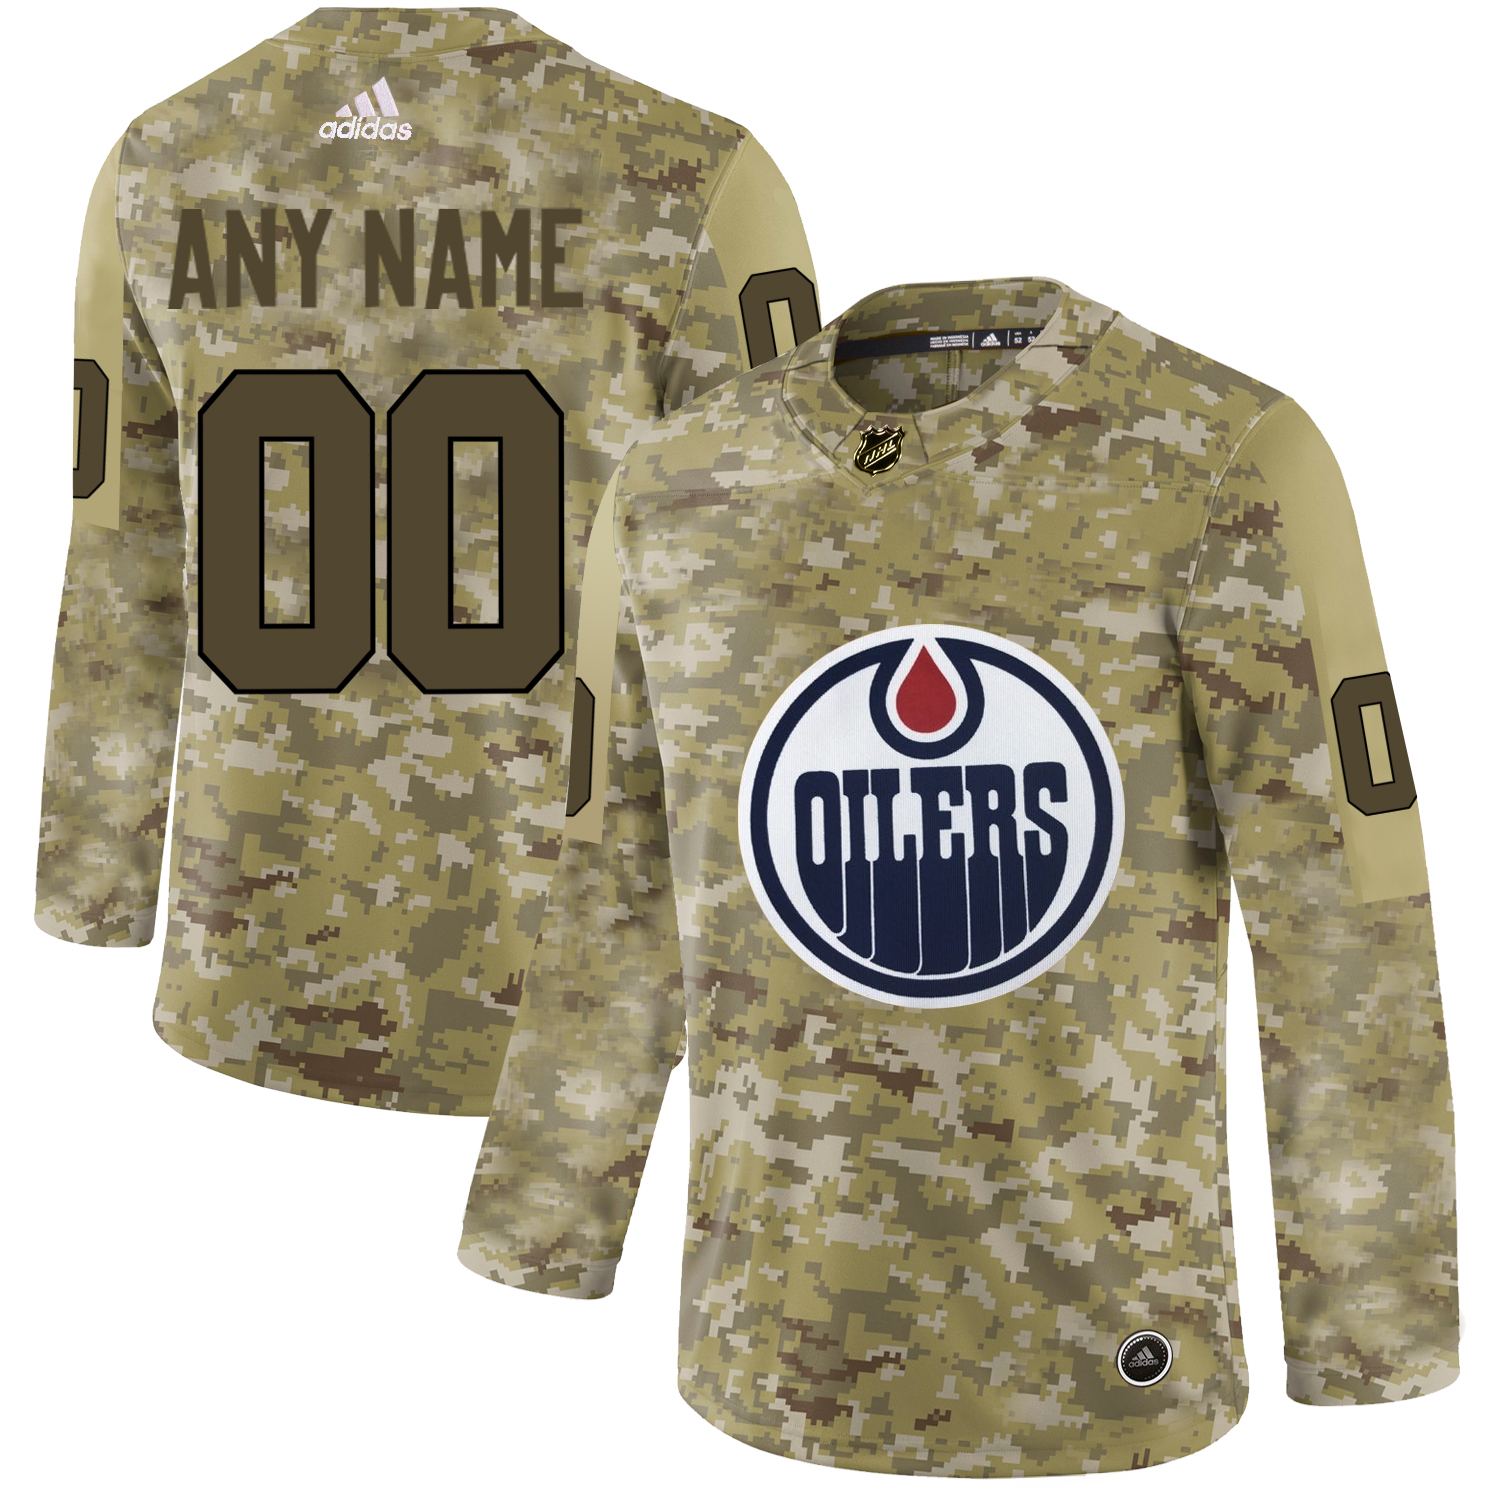 Edmonton Oilers Camo Men's Customized Adidas Jersey - Click Image to Close